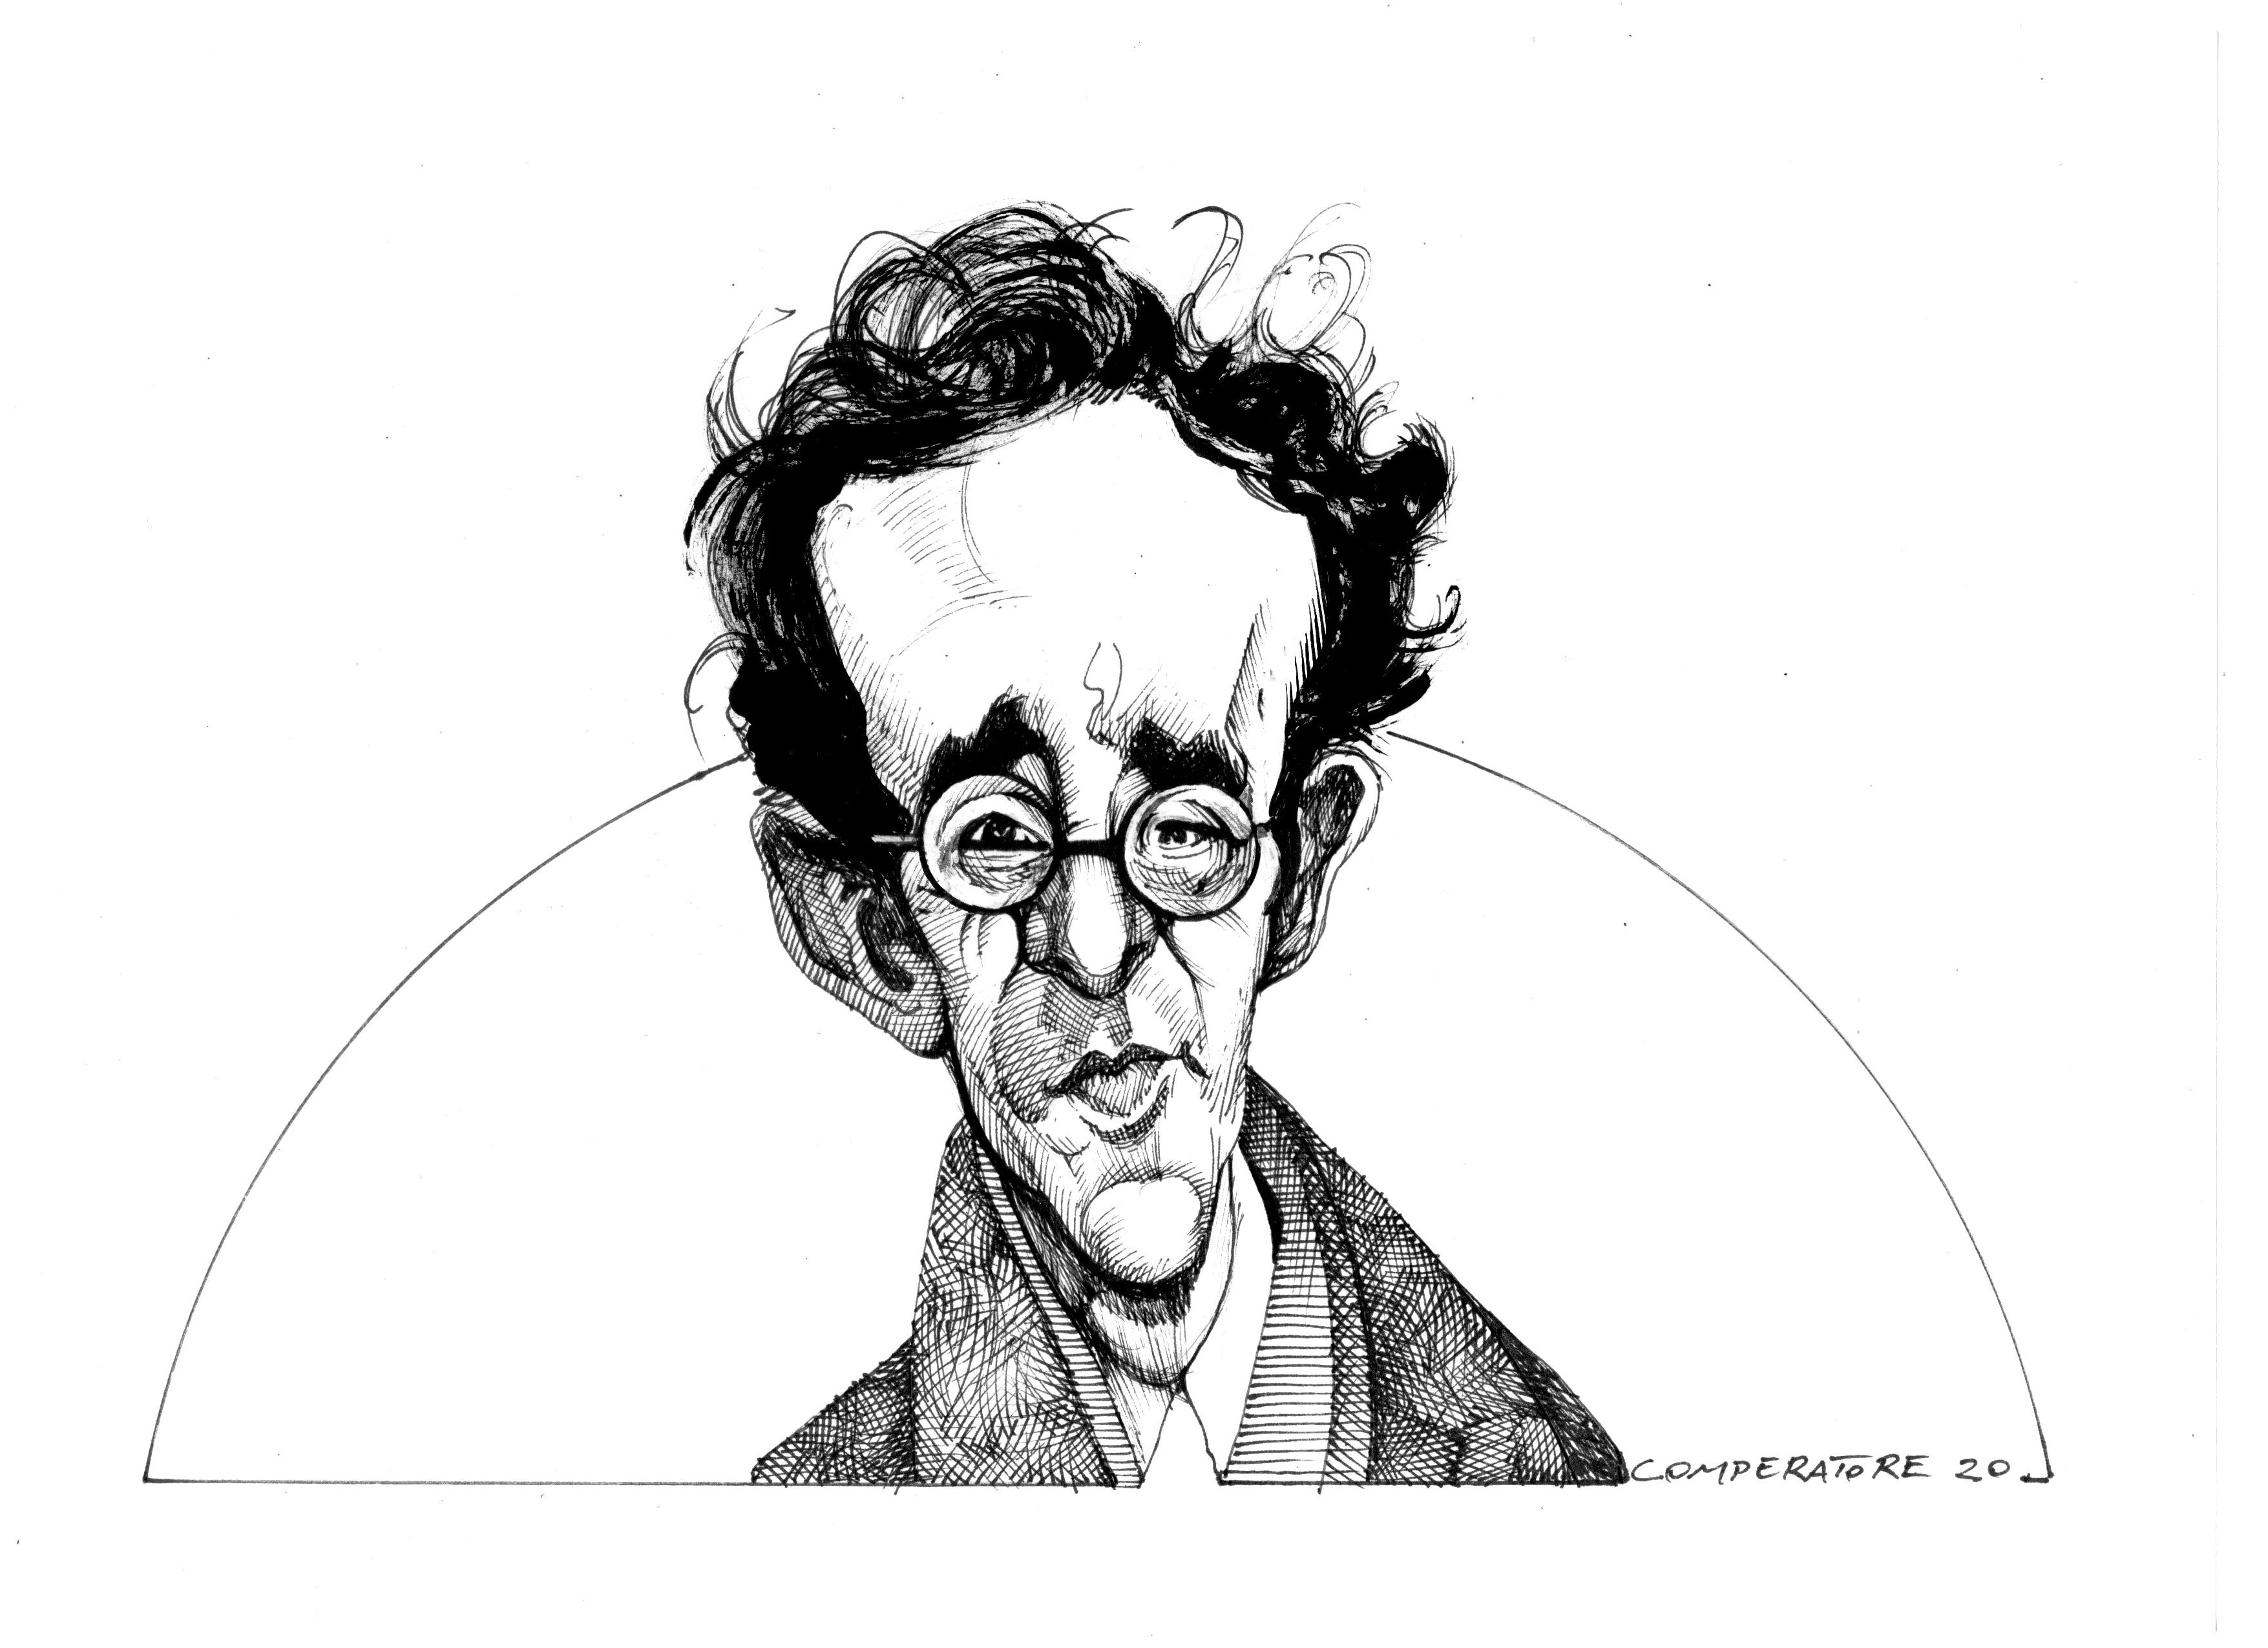 Roberto Bolaño.jpg